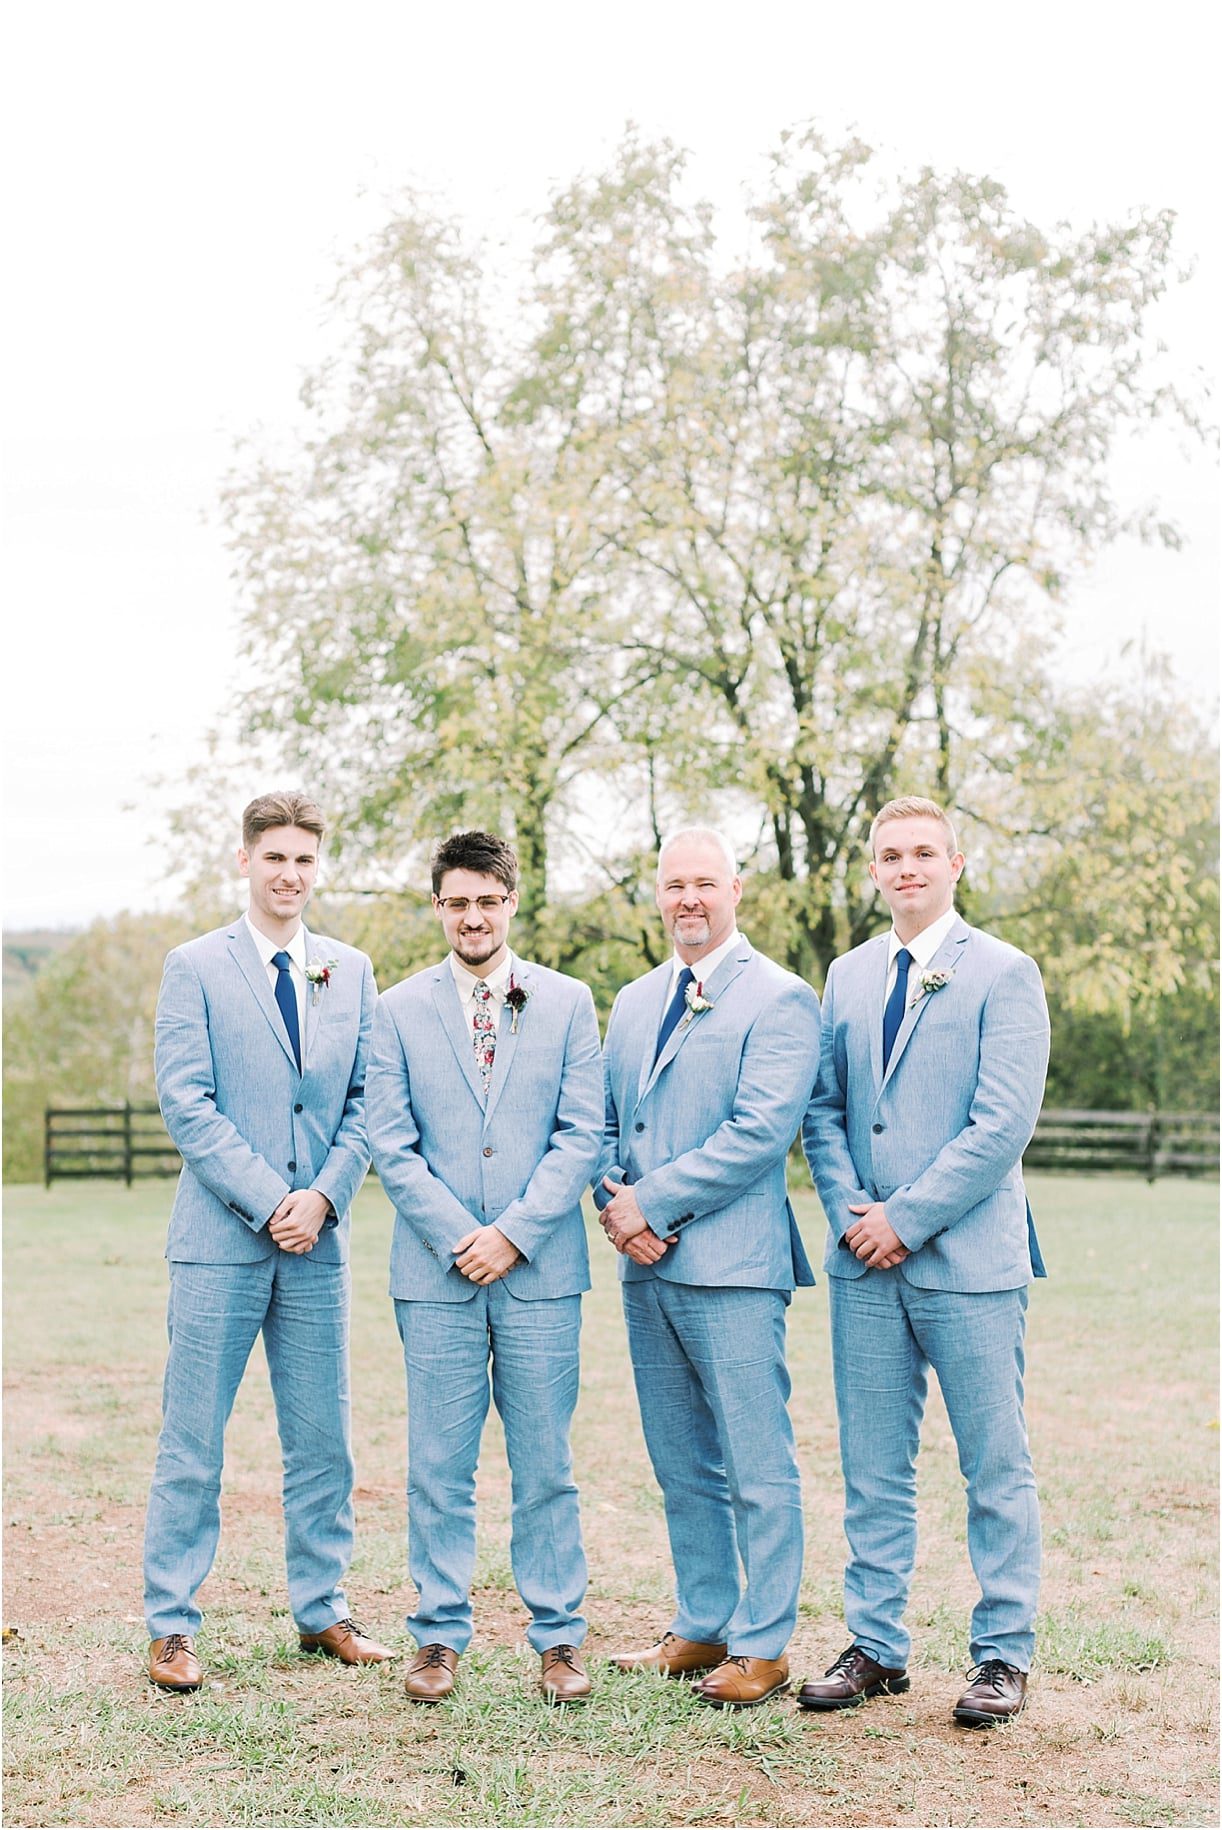 Dusty Blue Wedding Color Palette | Hill City Bride Virginia Weddings Wedding Blog | Something Blue Groomsmen